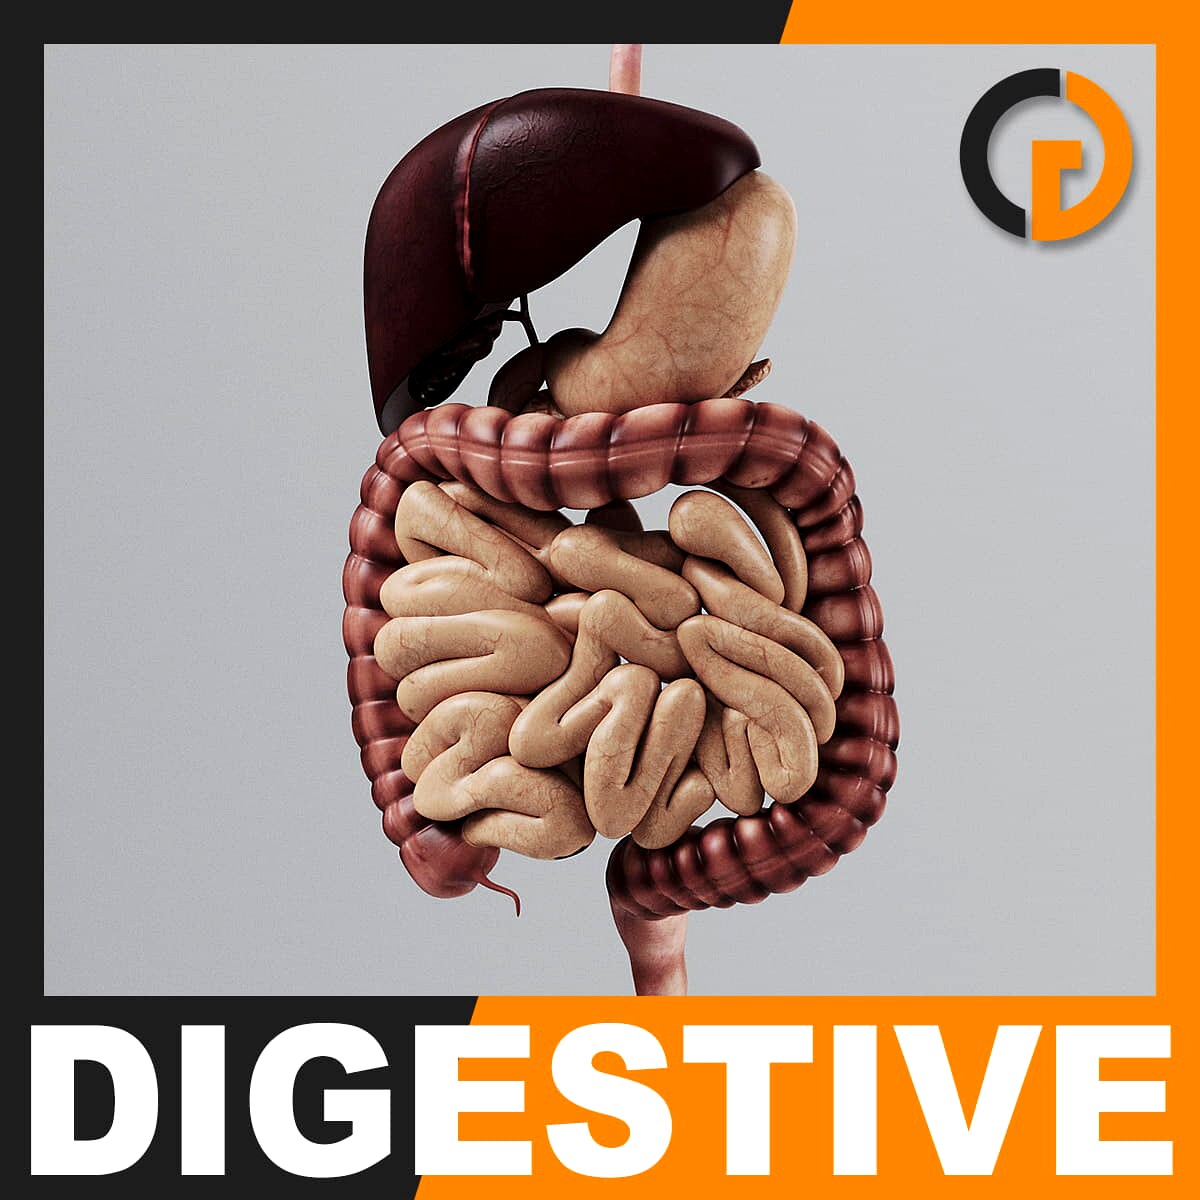 Human Digestive System - Anatomy